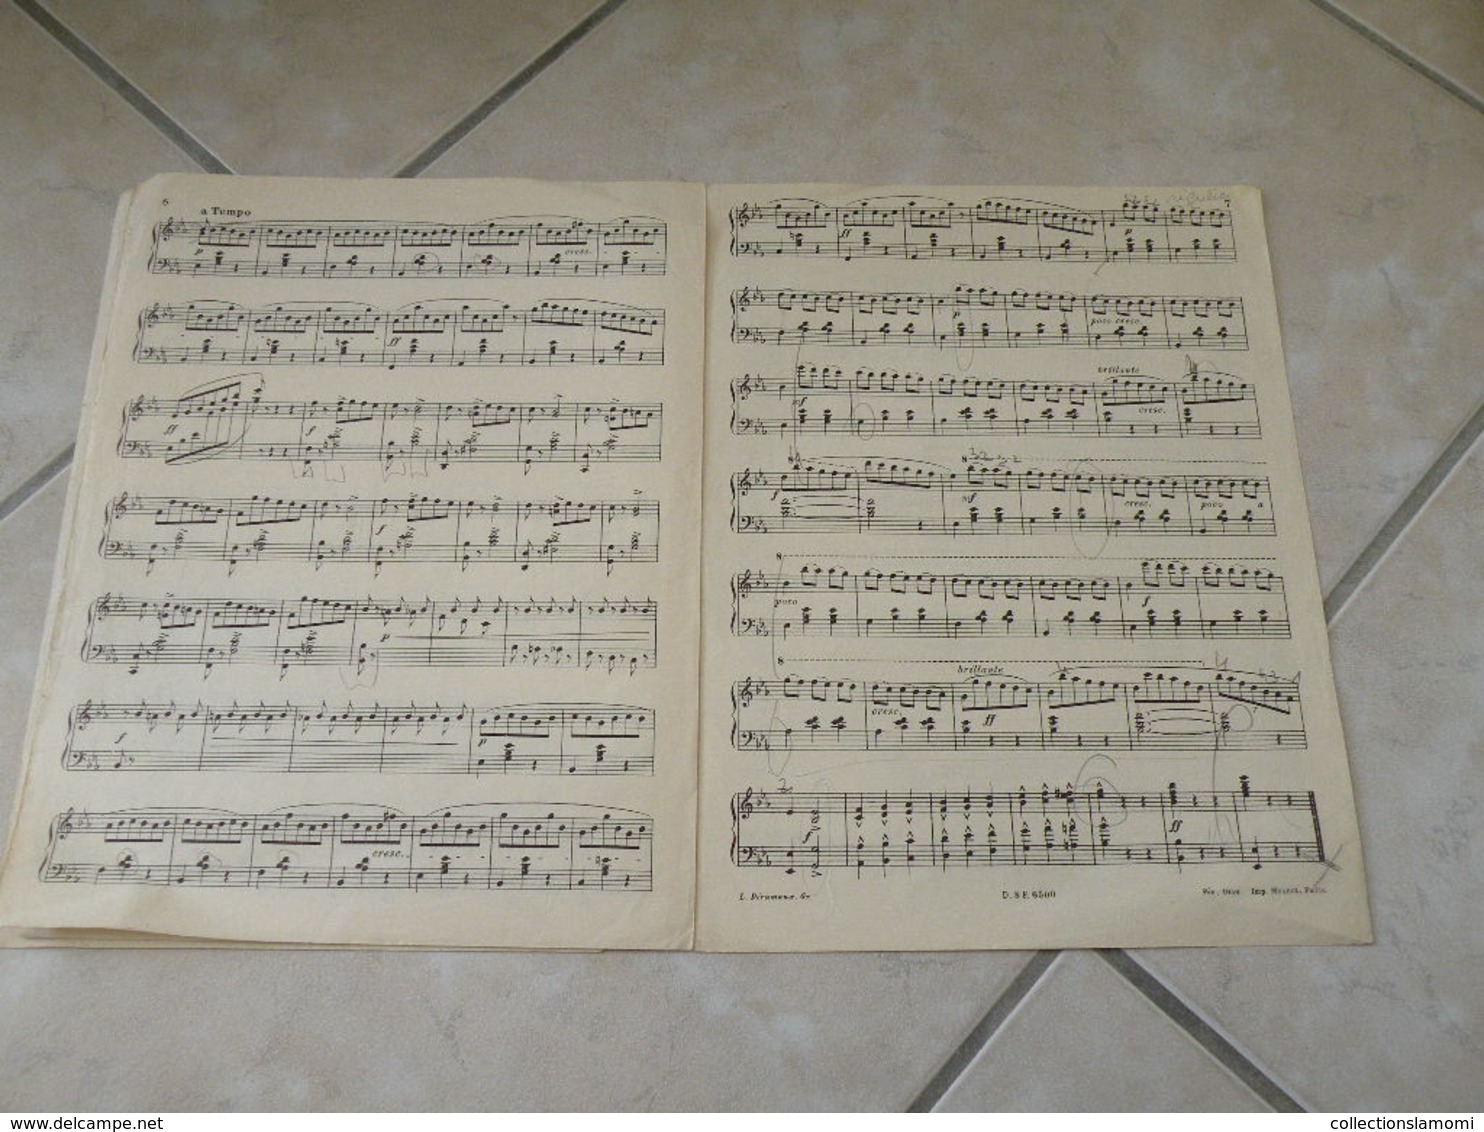 1er Valse, à Son Ami Théodore Ritter -(Musique Auguste Durand)- Partition (Piano) - Tasteninstrumente